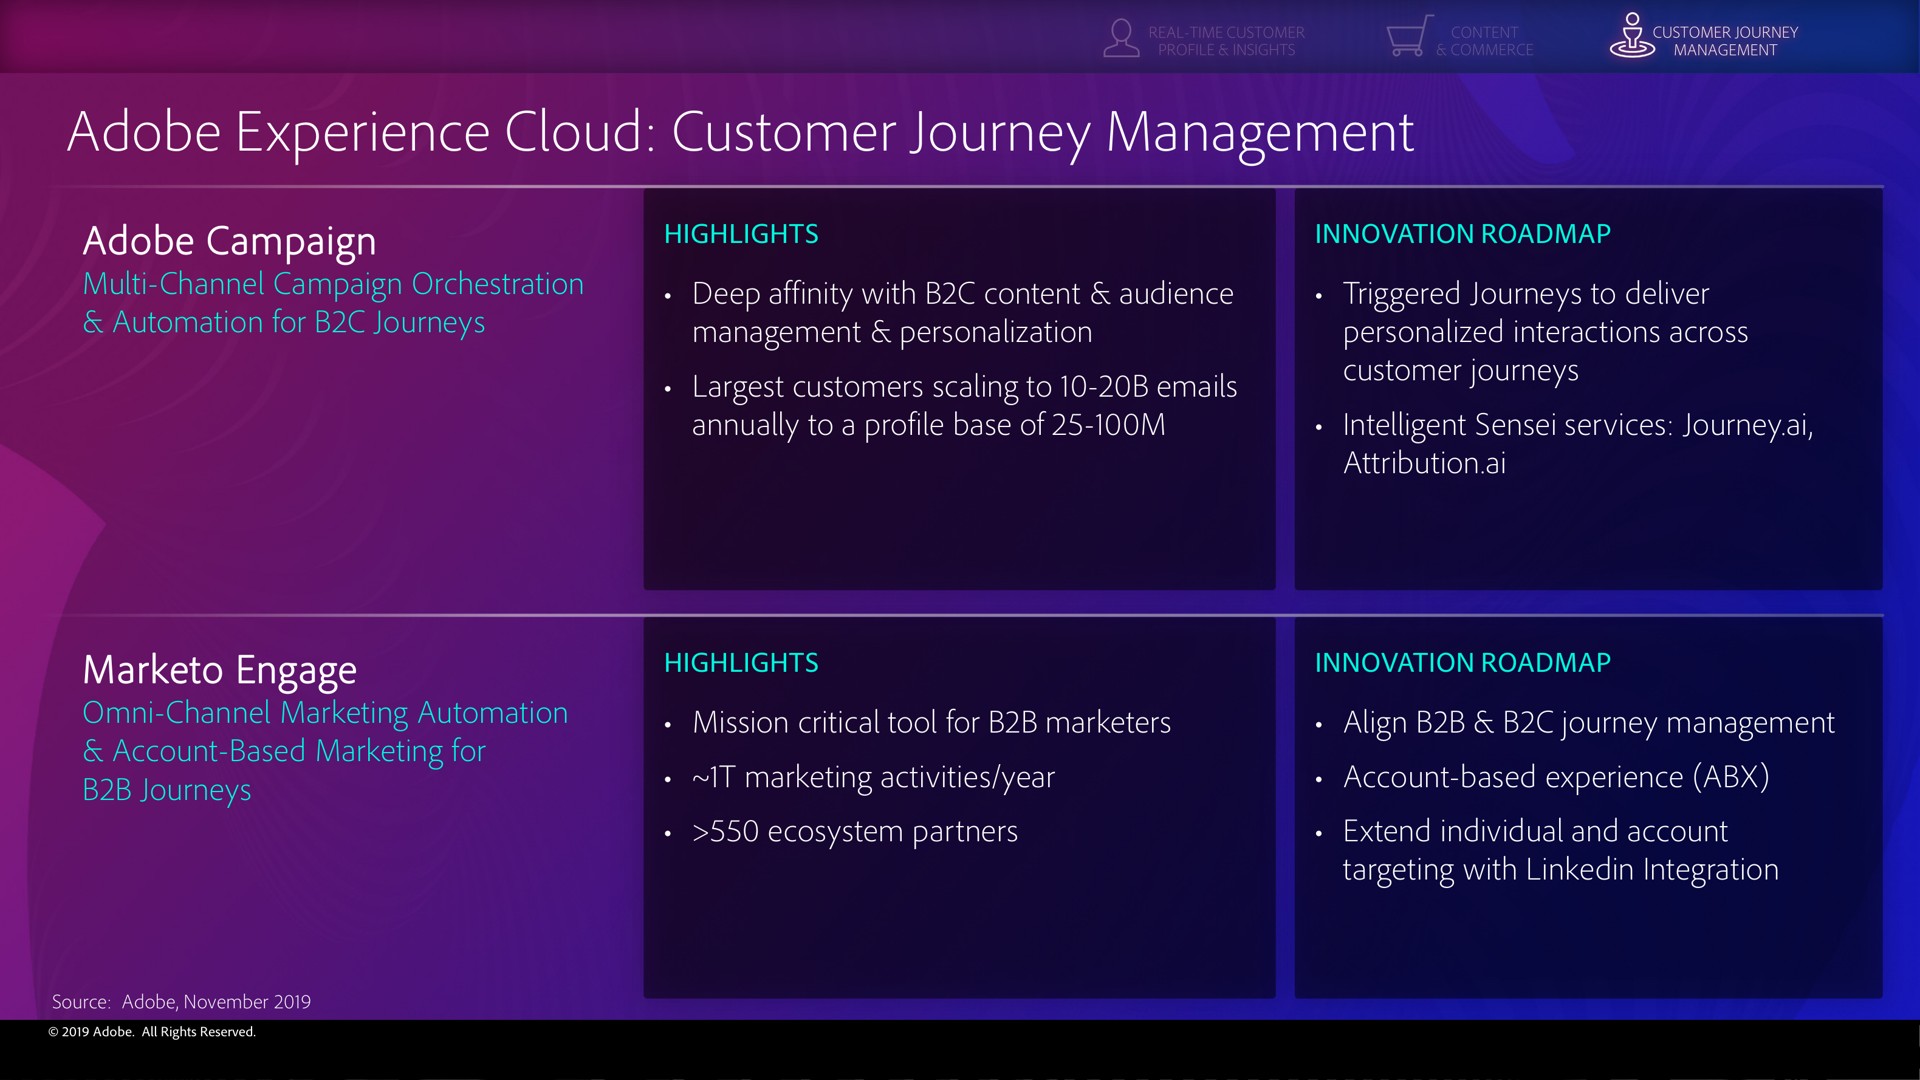 adobe experience cloud customer journey management | Adobe